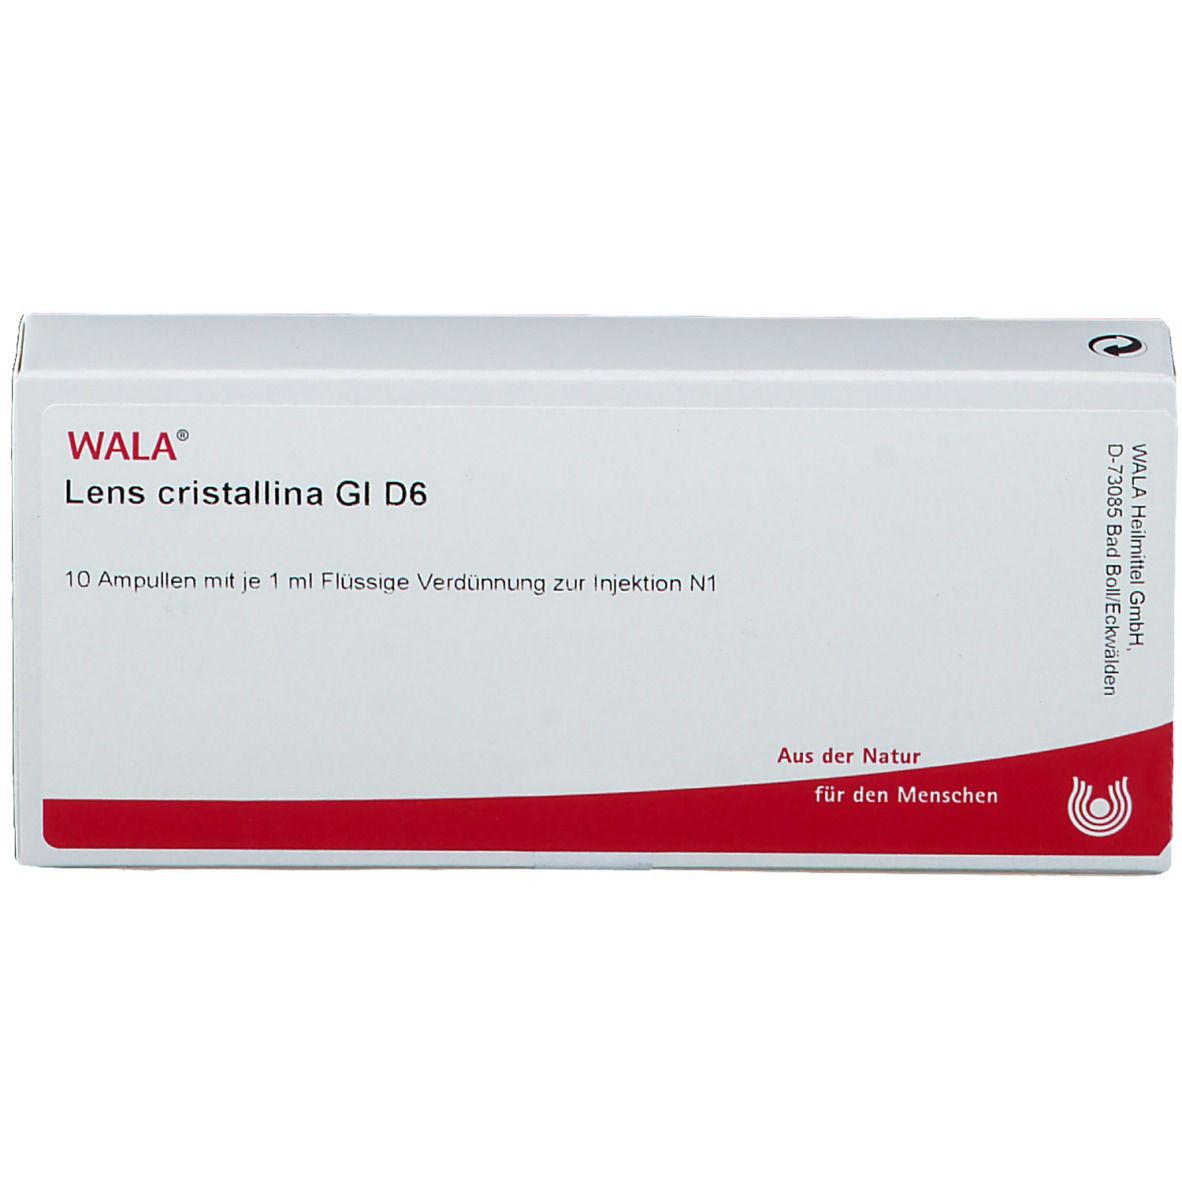 WALA® Lens cristallina Gl D 6